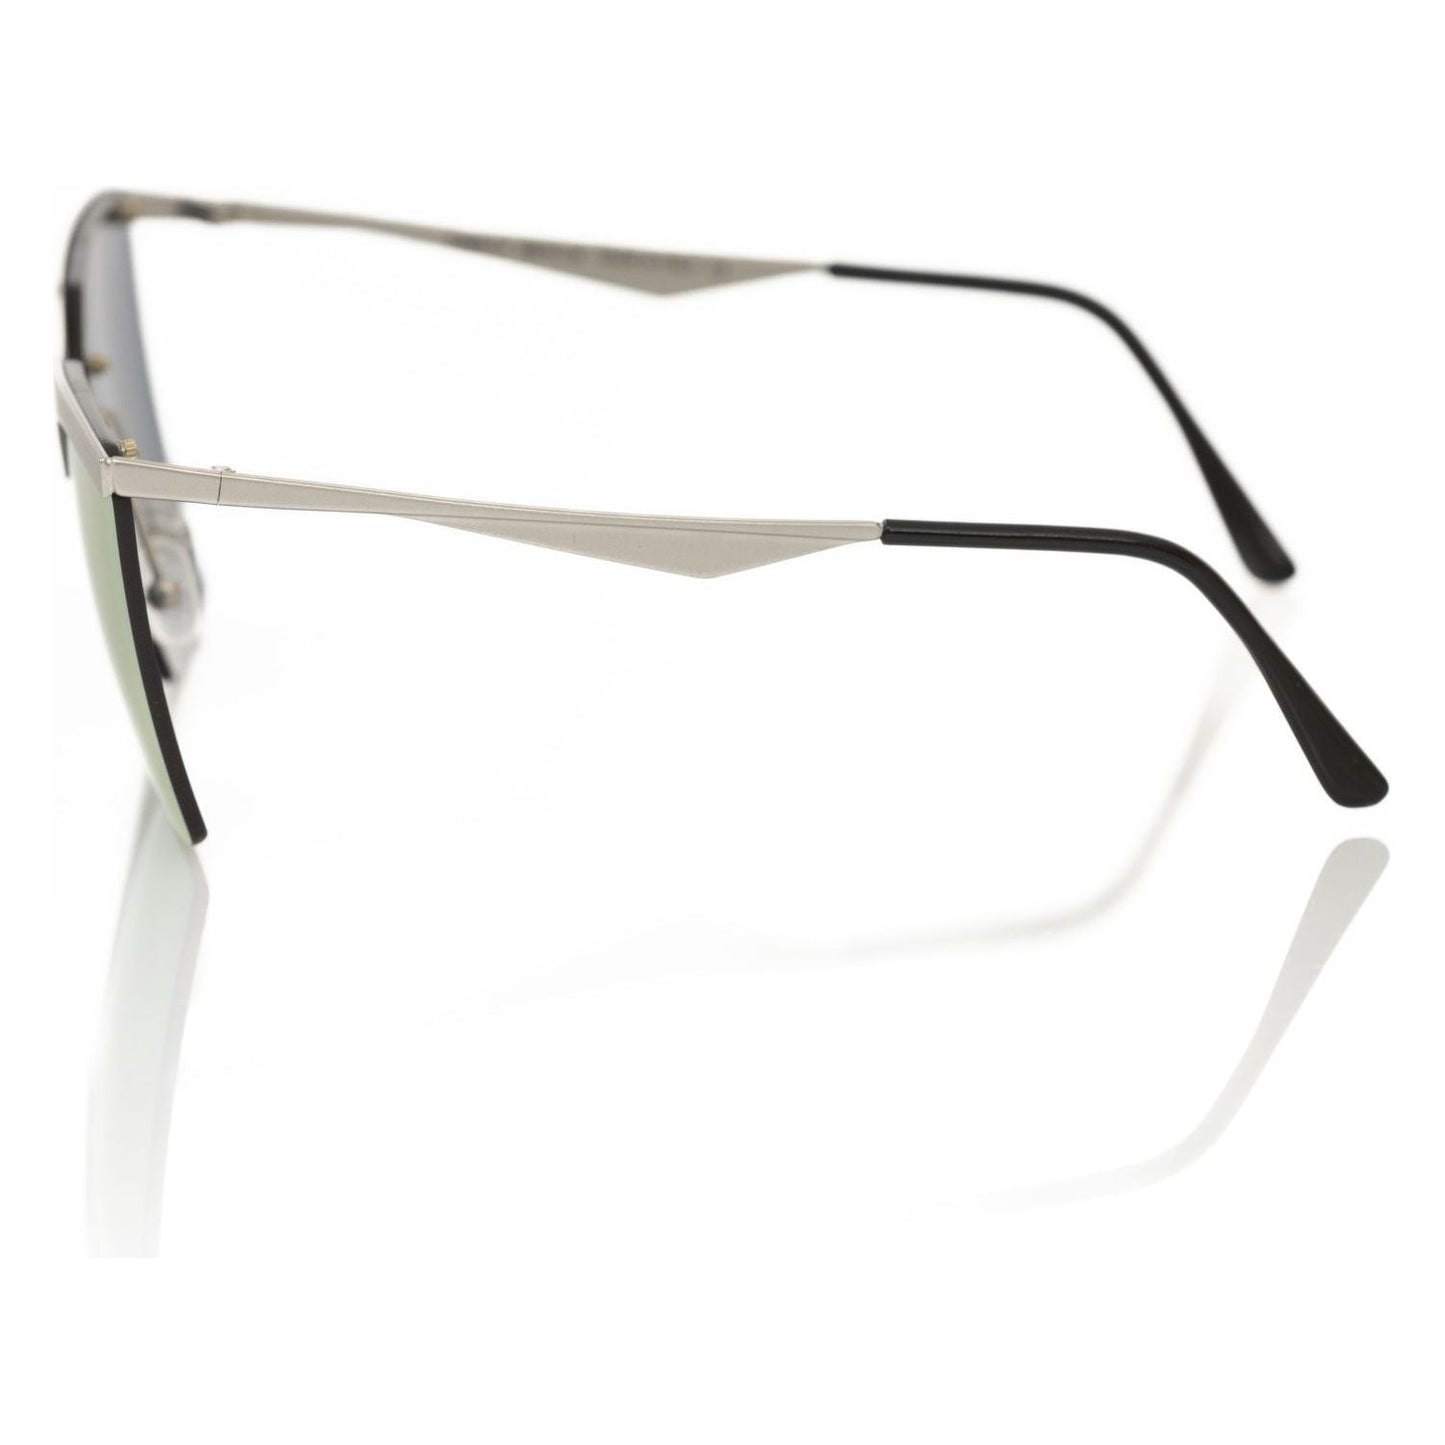 Frankie Morello Chic Silver Clubmaster Sunglasses with Shaded Lens silver-metallic-fibre-sunglasses-5